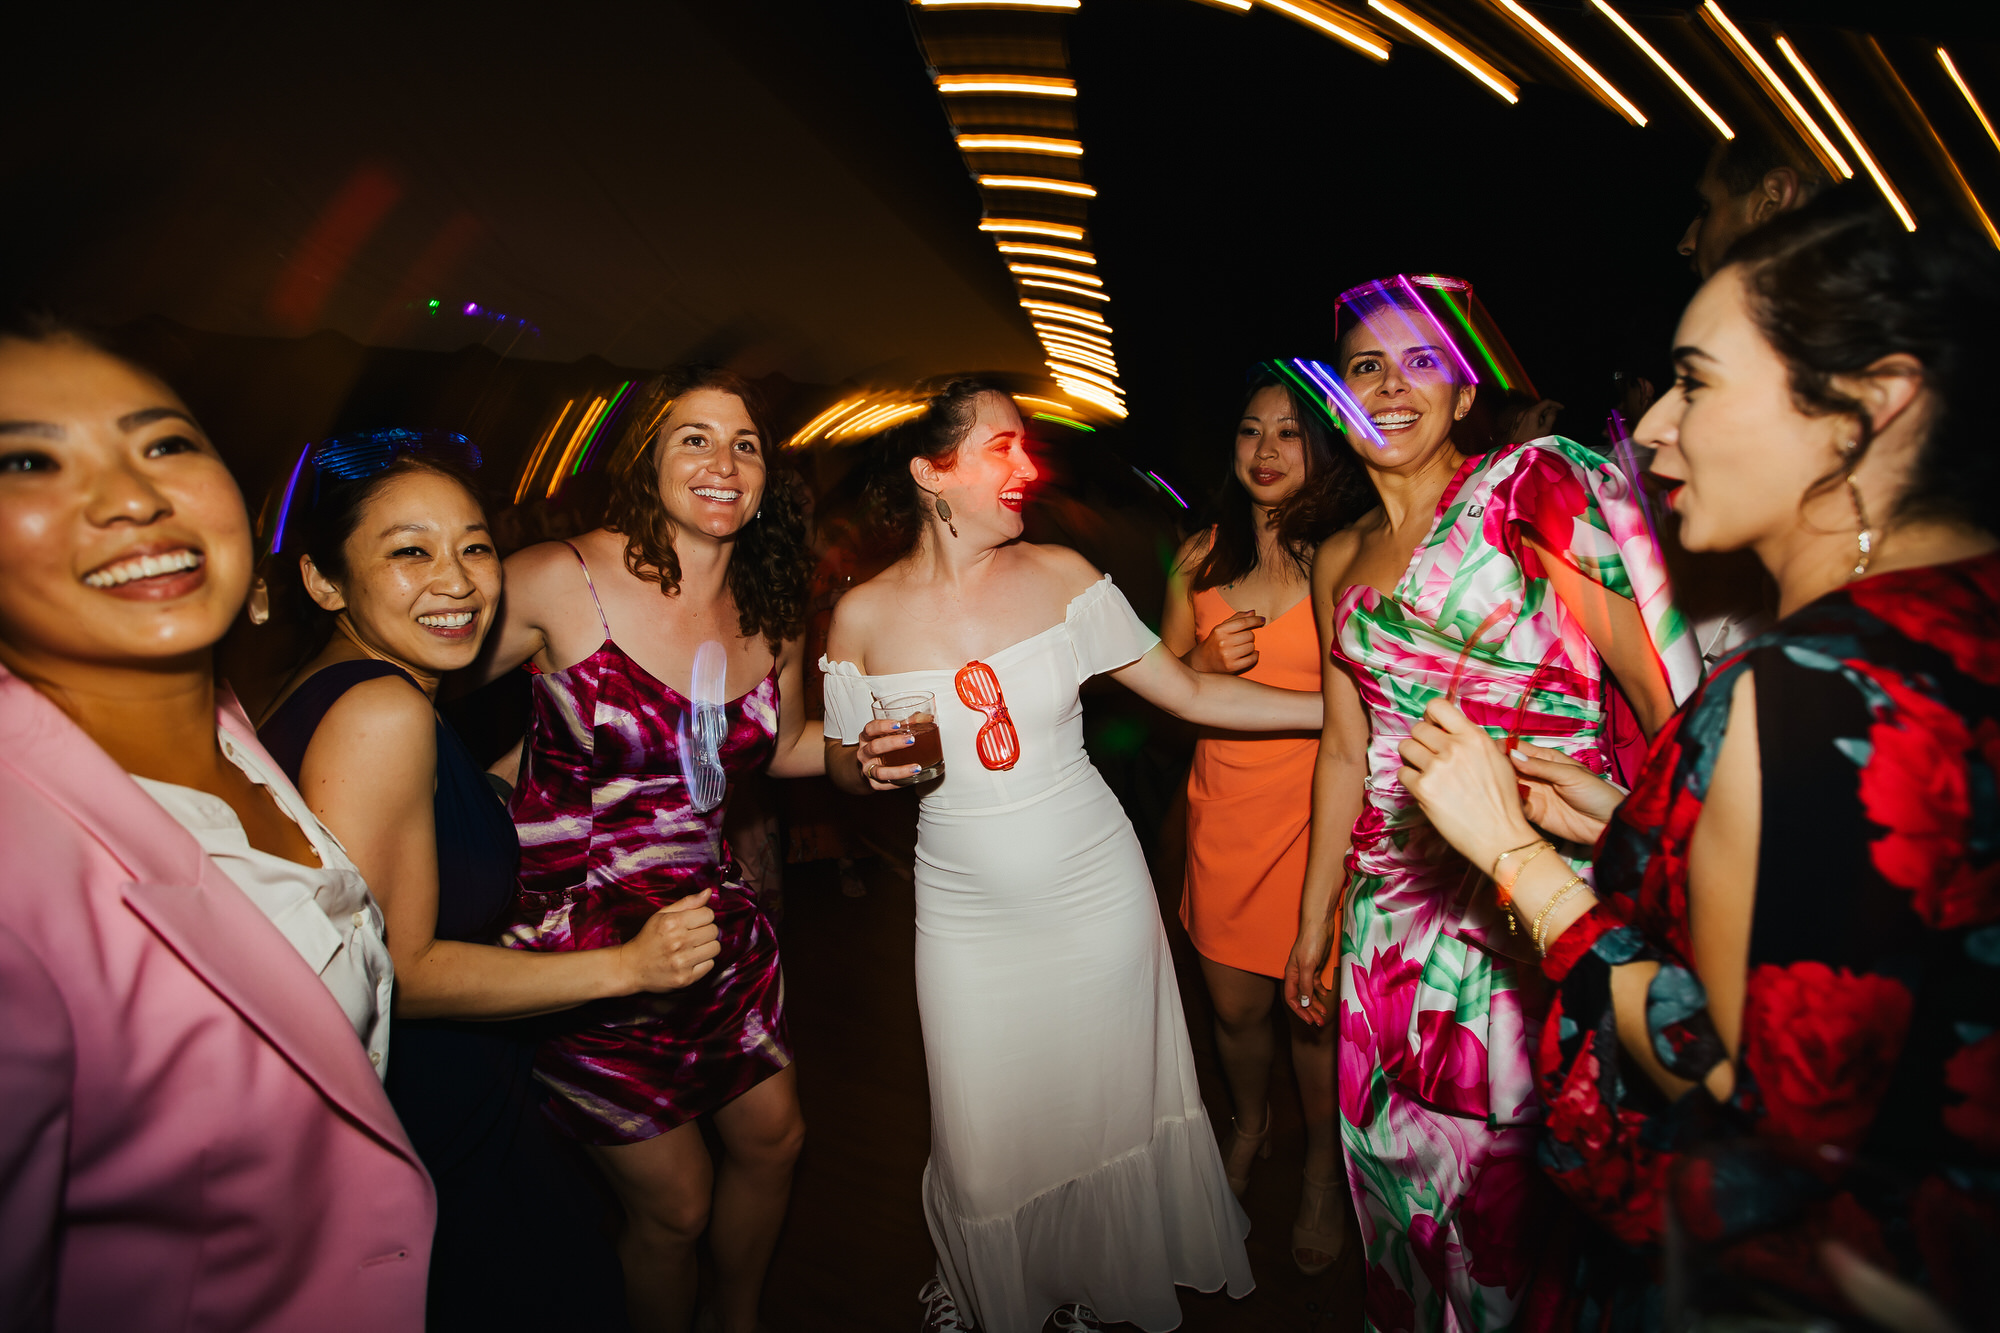 Wedding Guests Dancing at an LGBTQ+ Wedding Reception